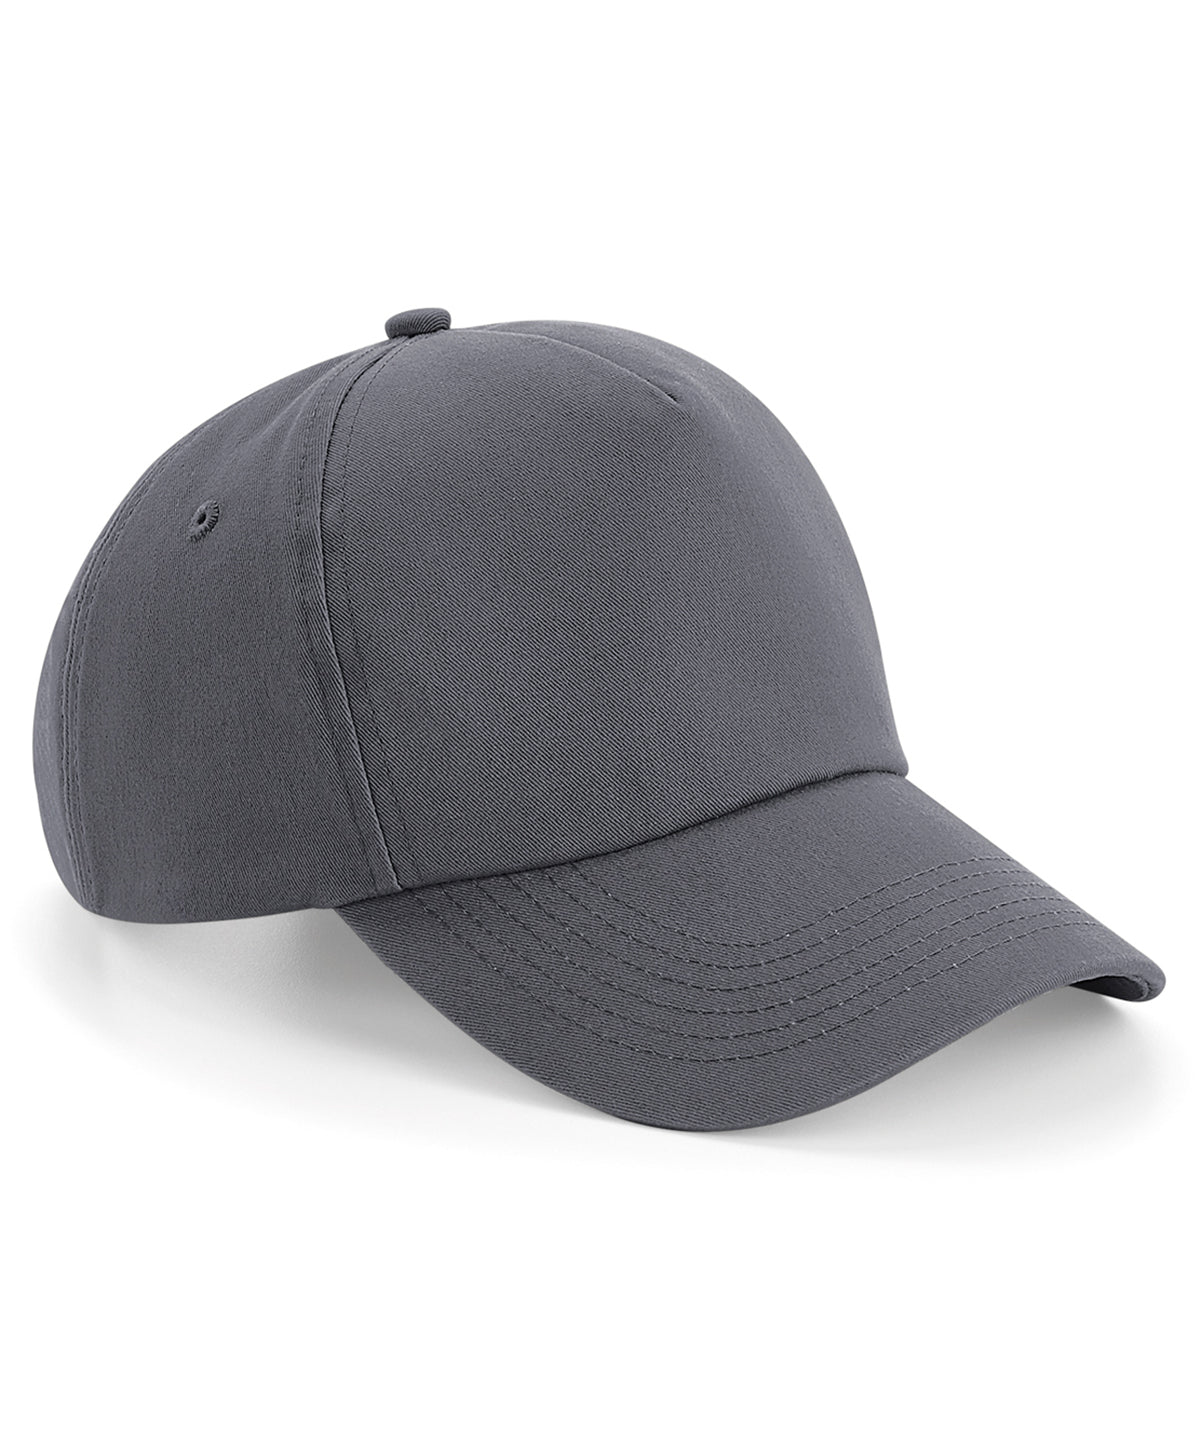 Personalised Caps - Dark Grey Beechfield Authentic 5-panel cap